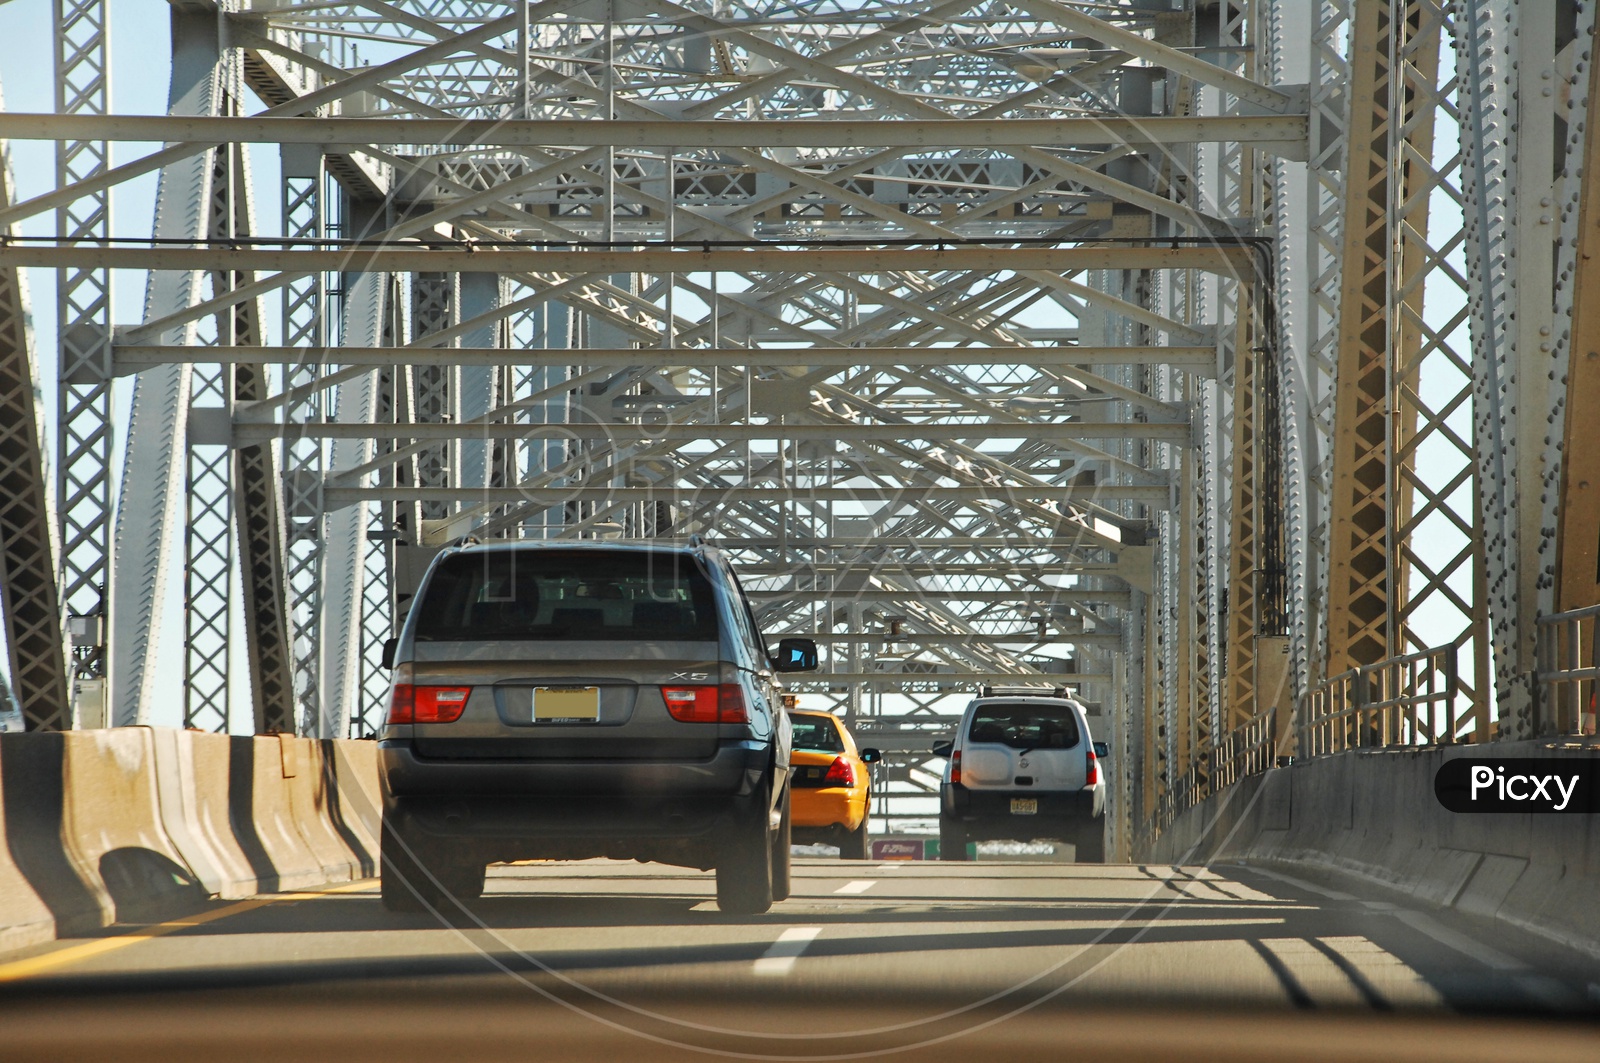 Moving cars on a bridge